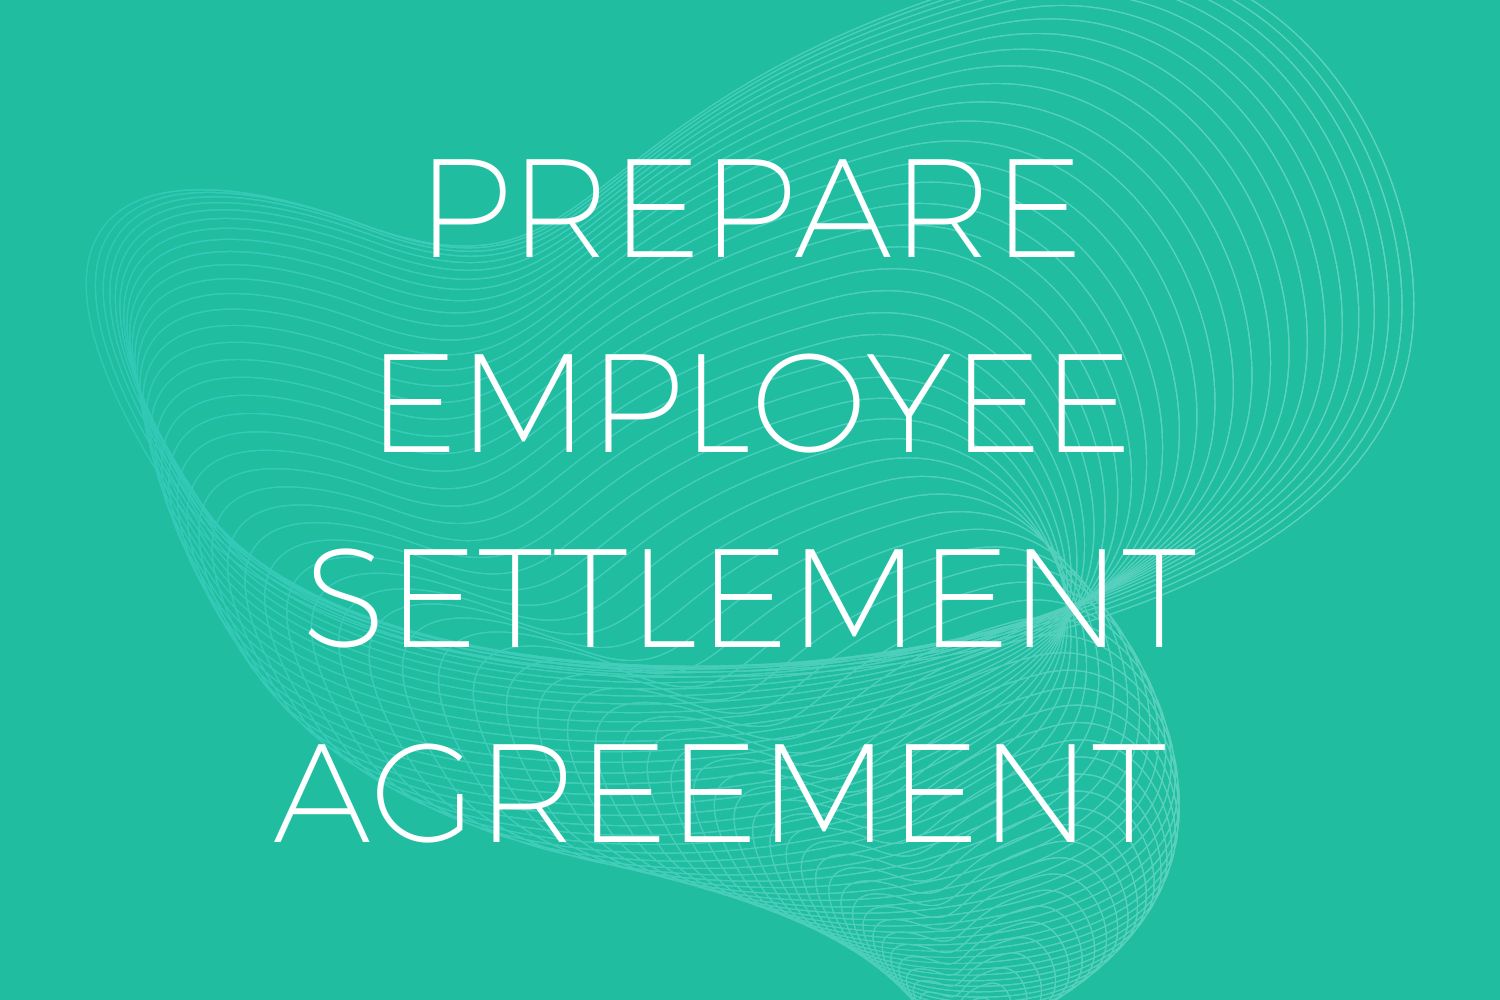 Prepare employee Settlement Agreement